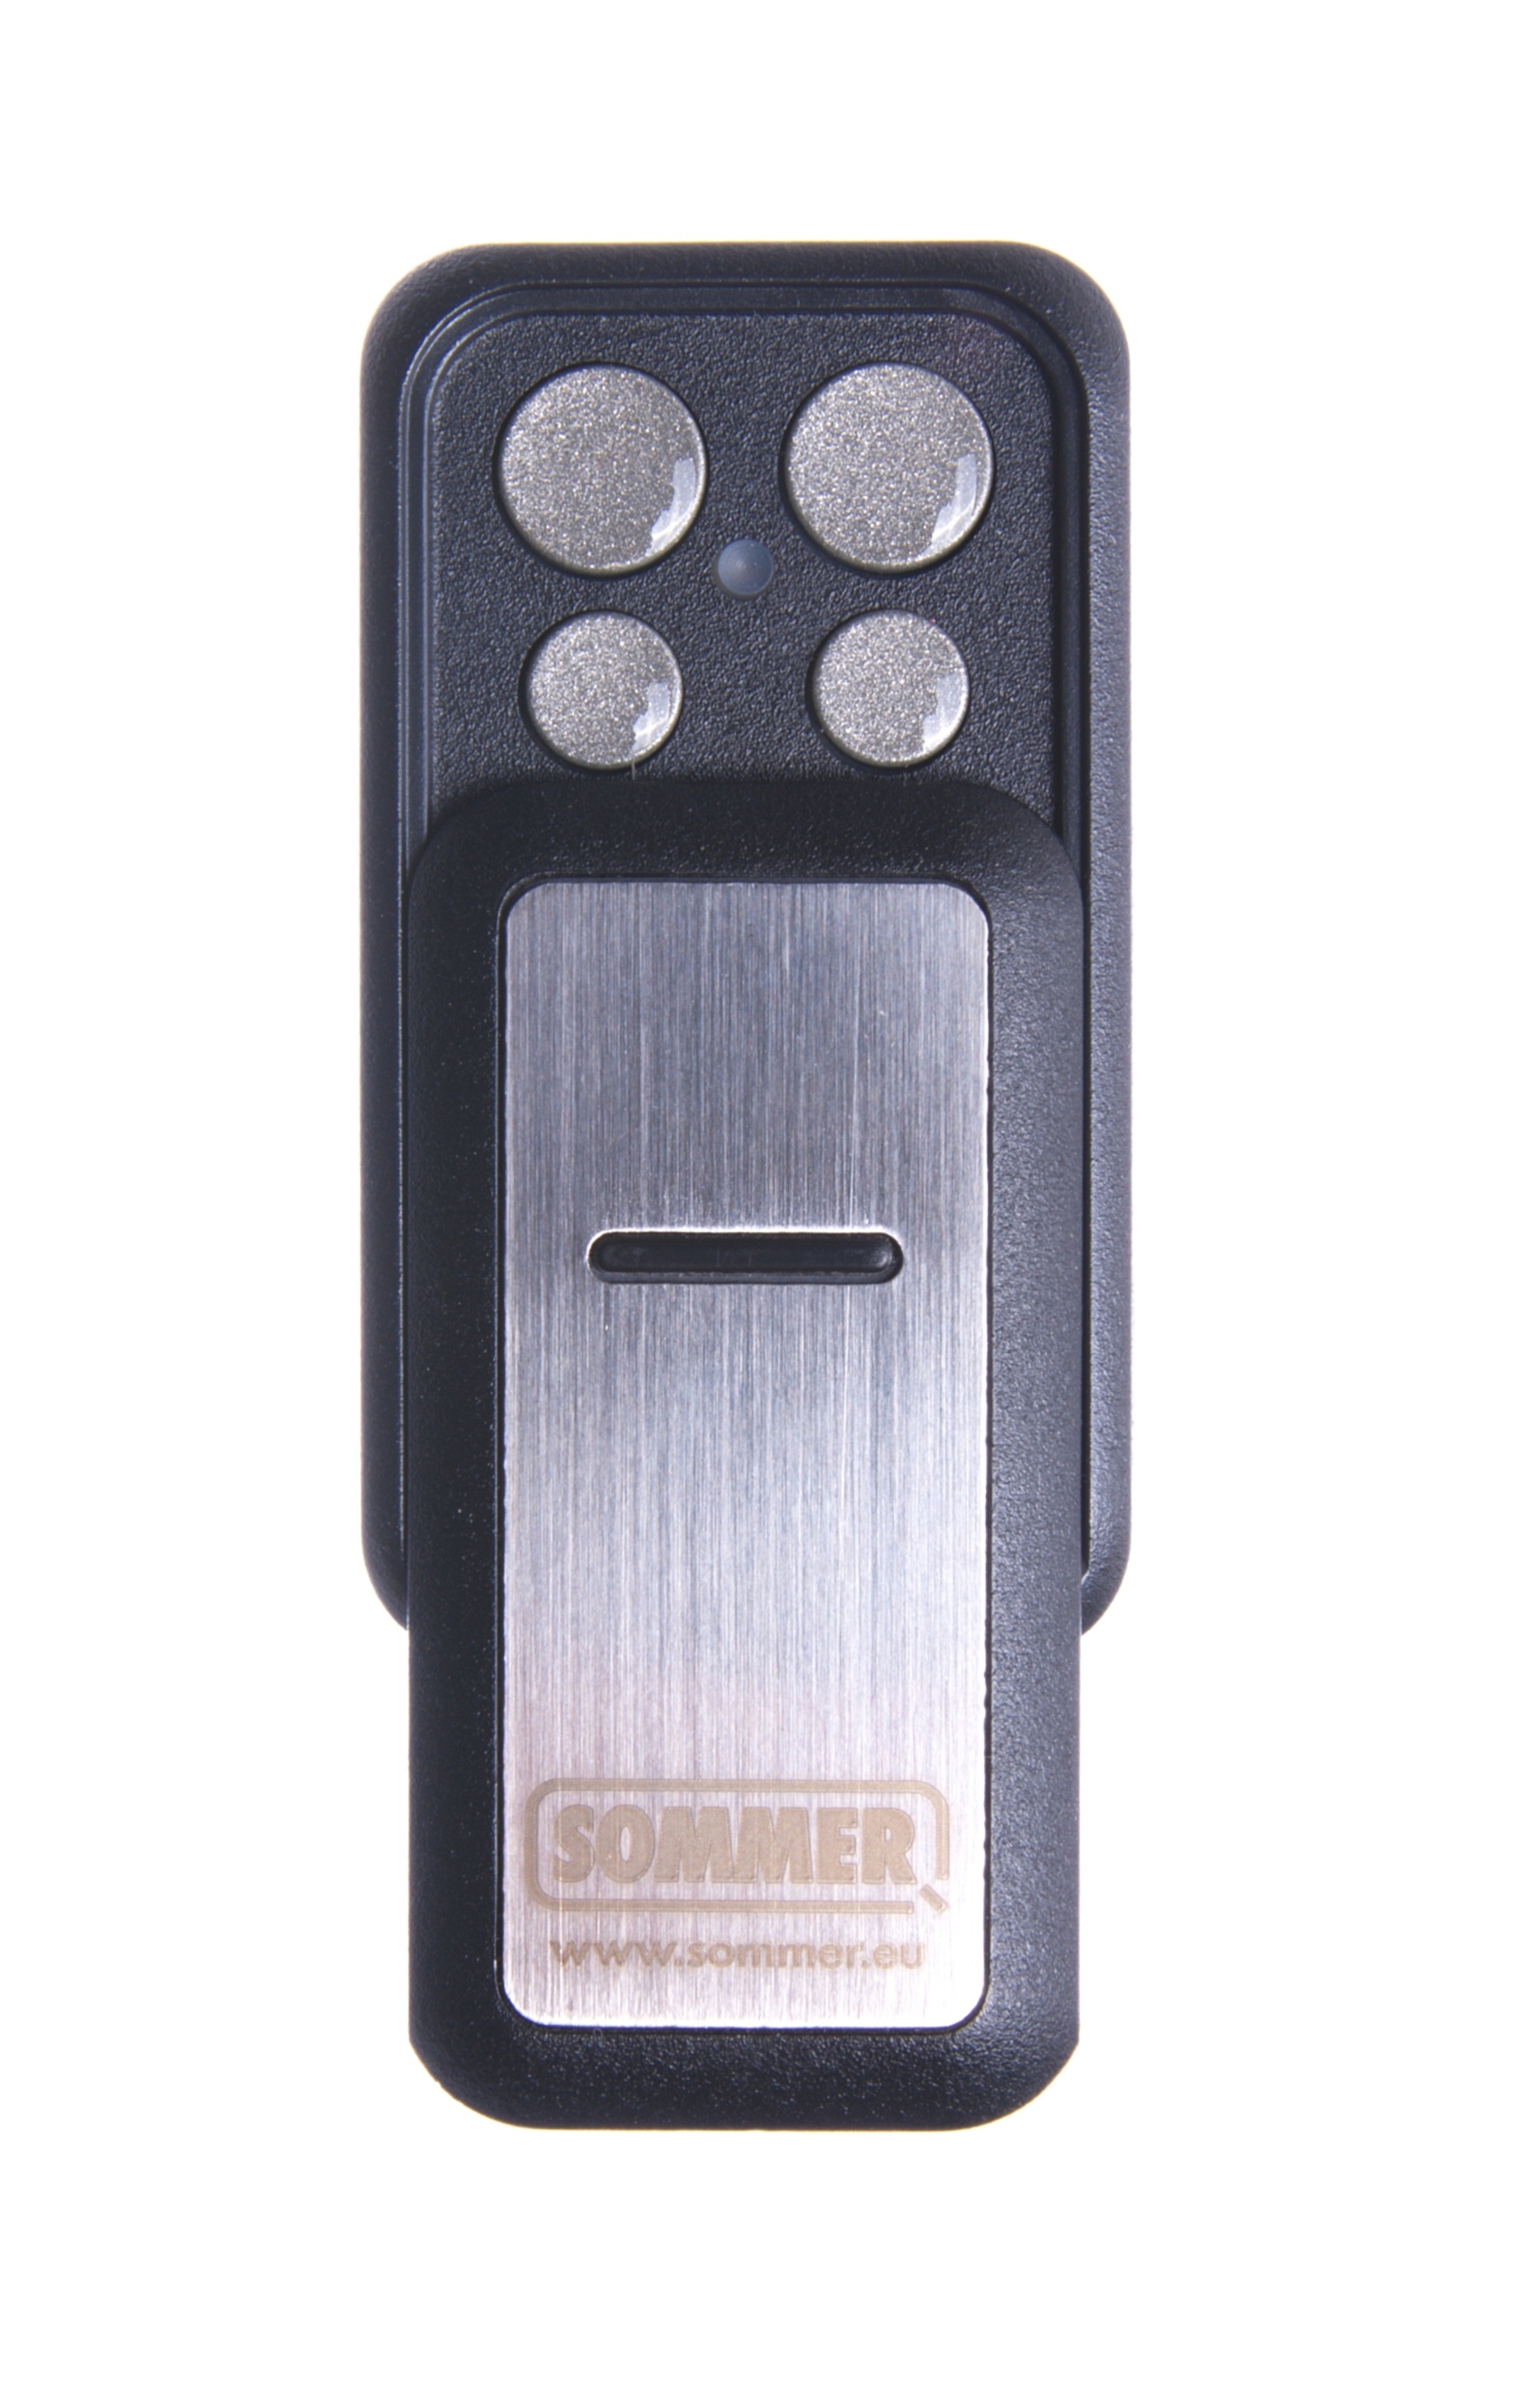 Sommer Slider+ S10305TX40-868-4, 4 kanálový výsuvný dálkový ovladač, 868,8 Mhz, originální